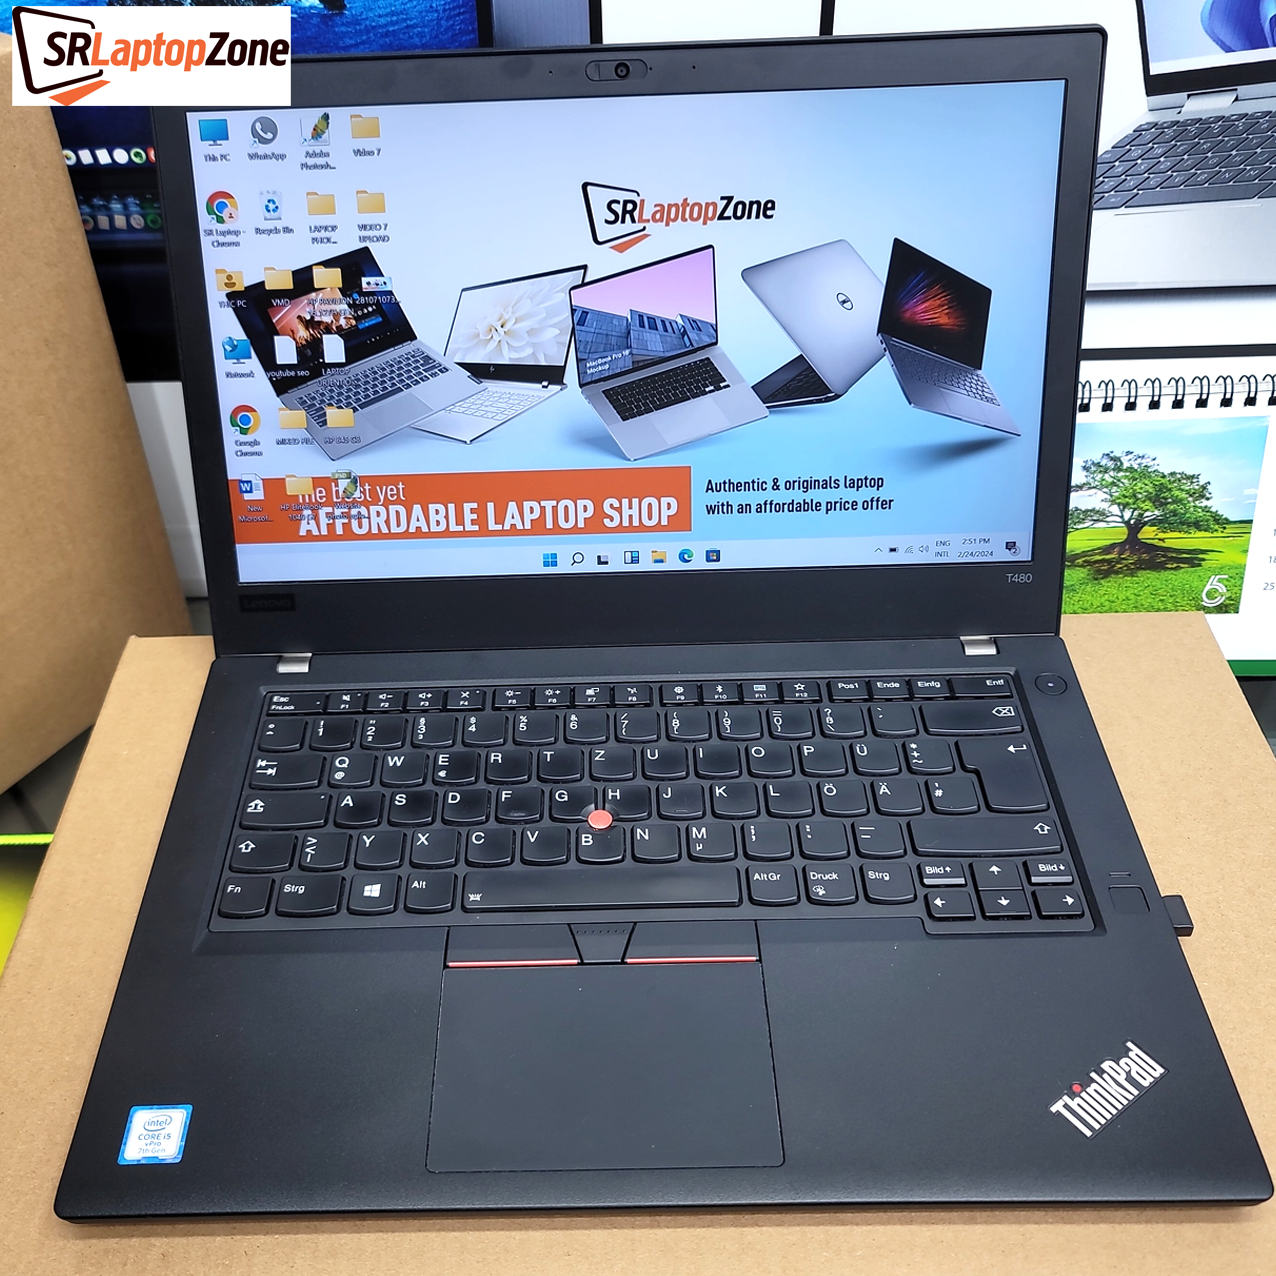 Lenovo Thinkpad T480 Core i5 7th Gen, Ram 8 Gb, SSD 256 Gb, Display 14" FHD Bussiness Class Laptop